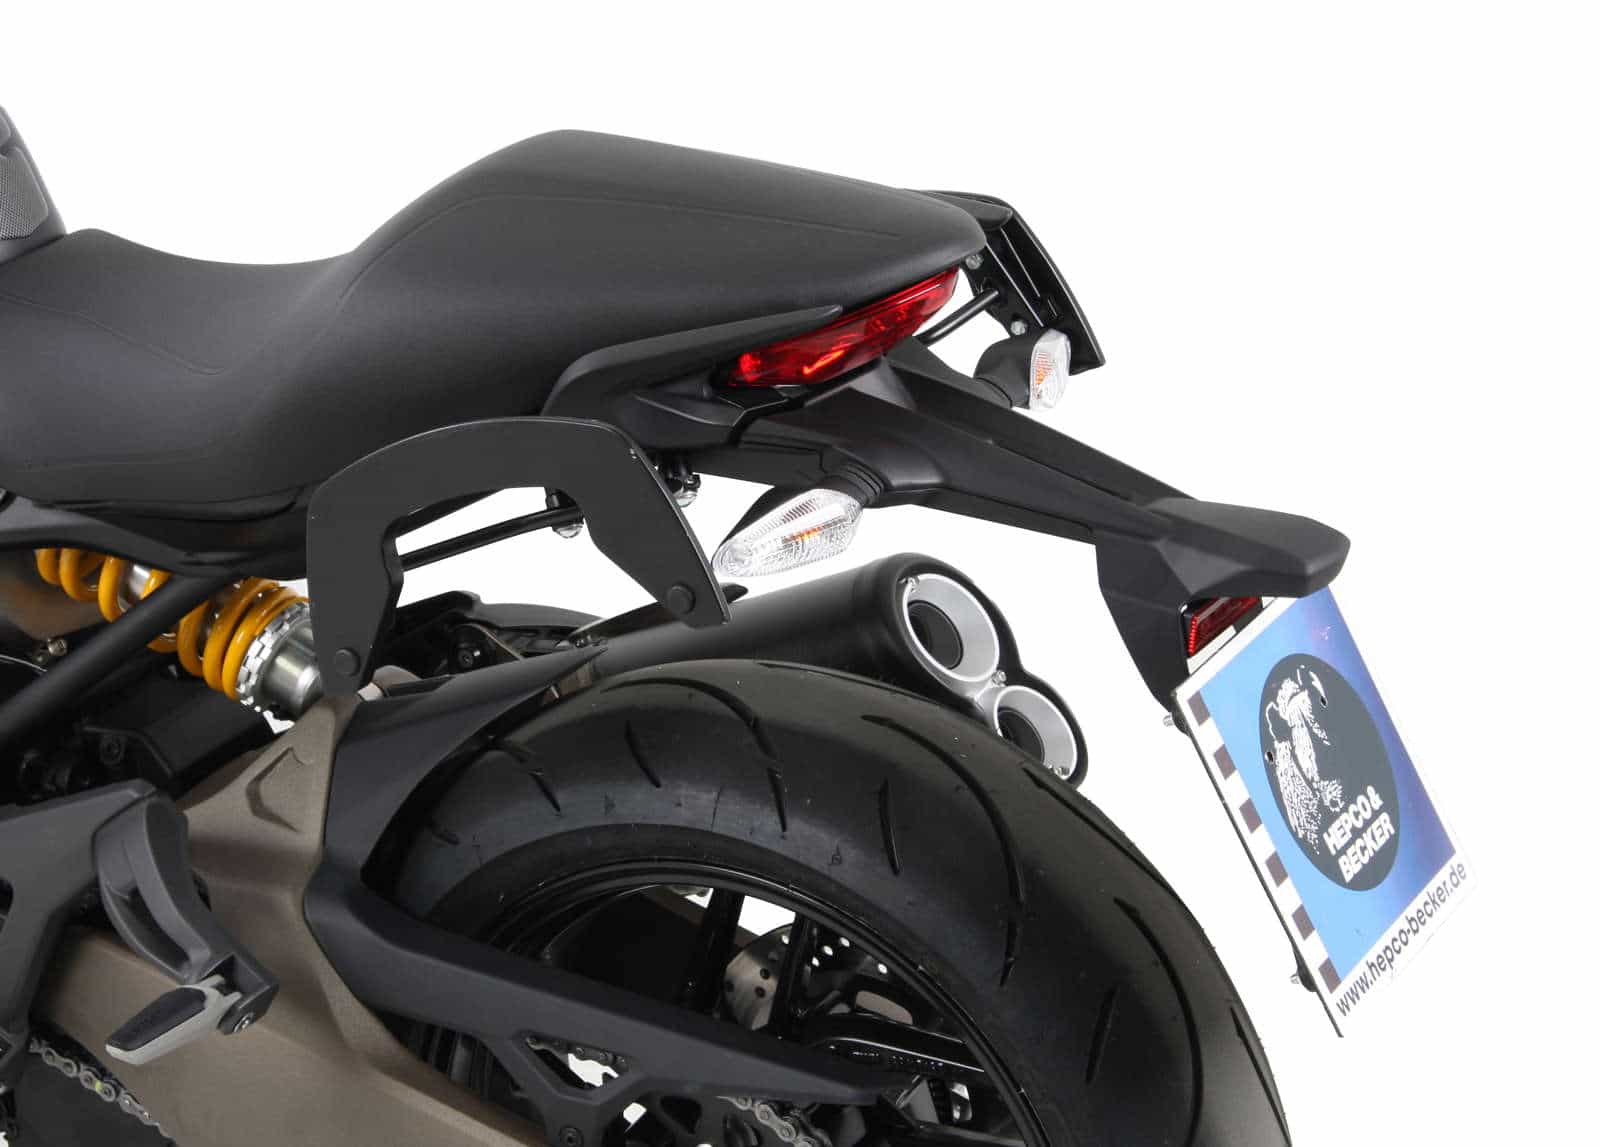 C-Bow sidecarrier for Ducati Monster 821 (2014-2017)